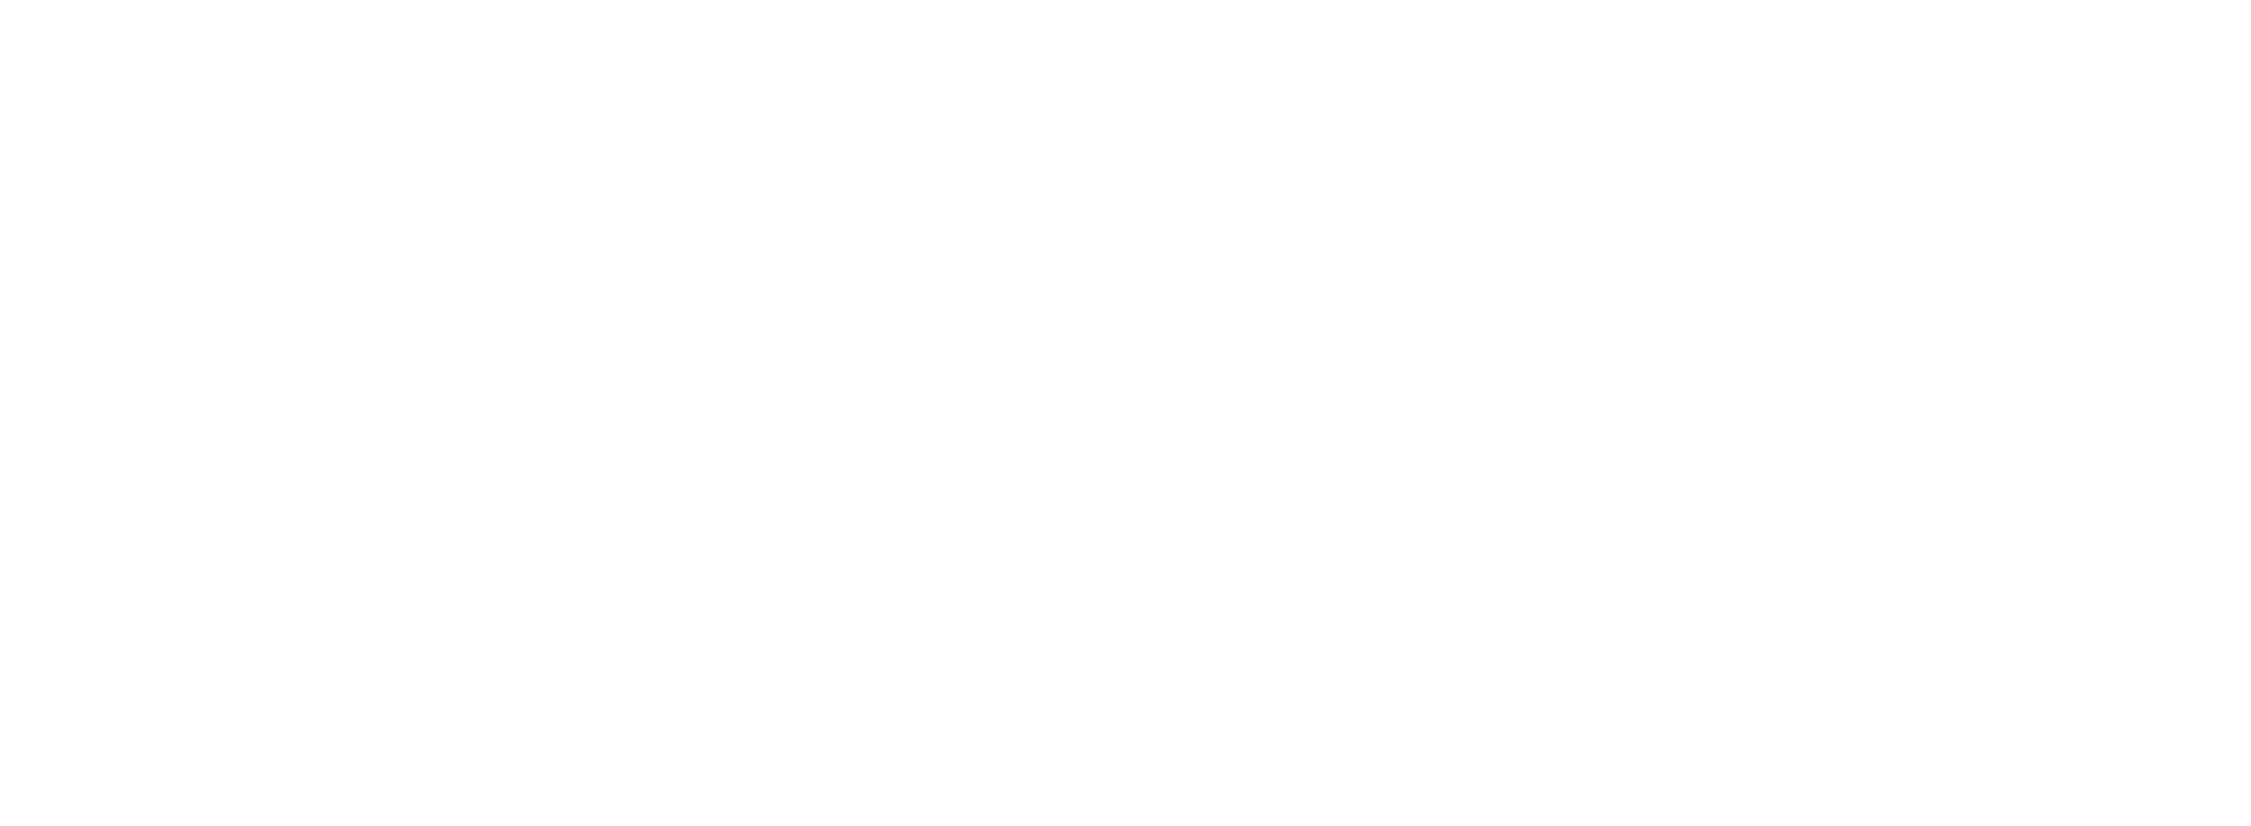 Muskegon Country Club logo